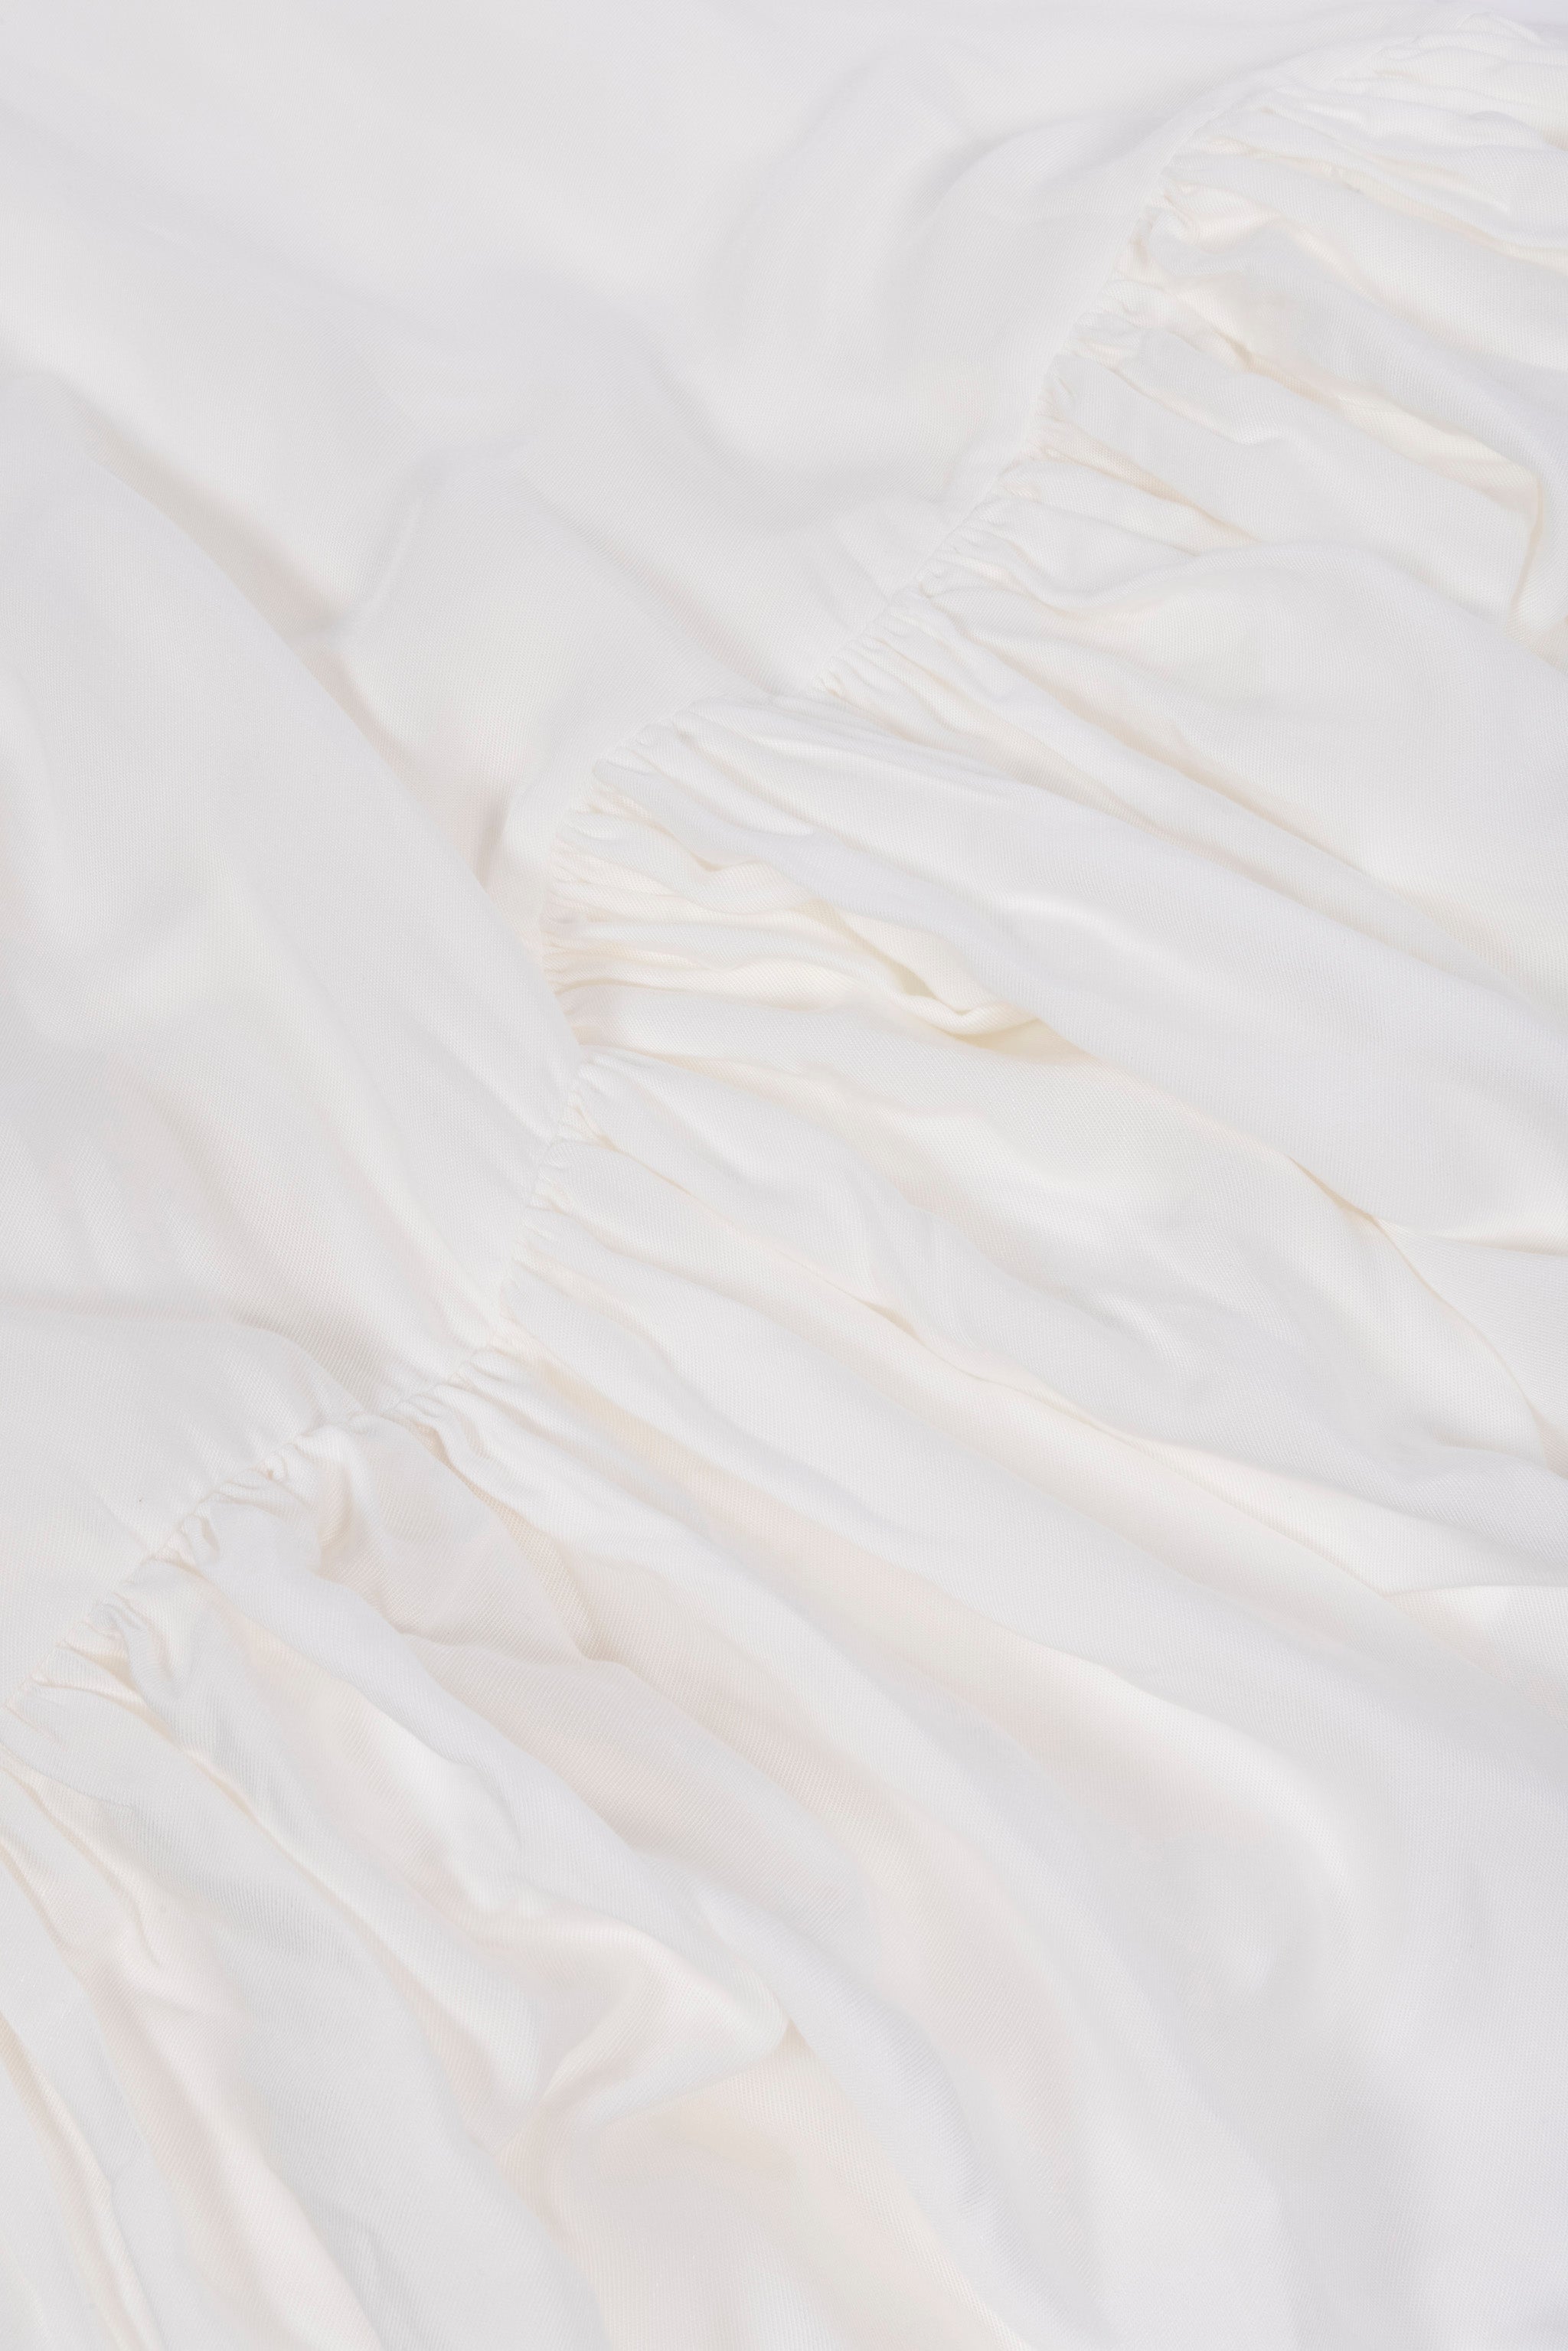 Ruffle Hem Dress (White)